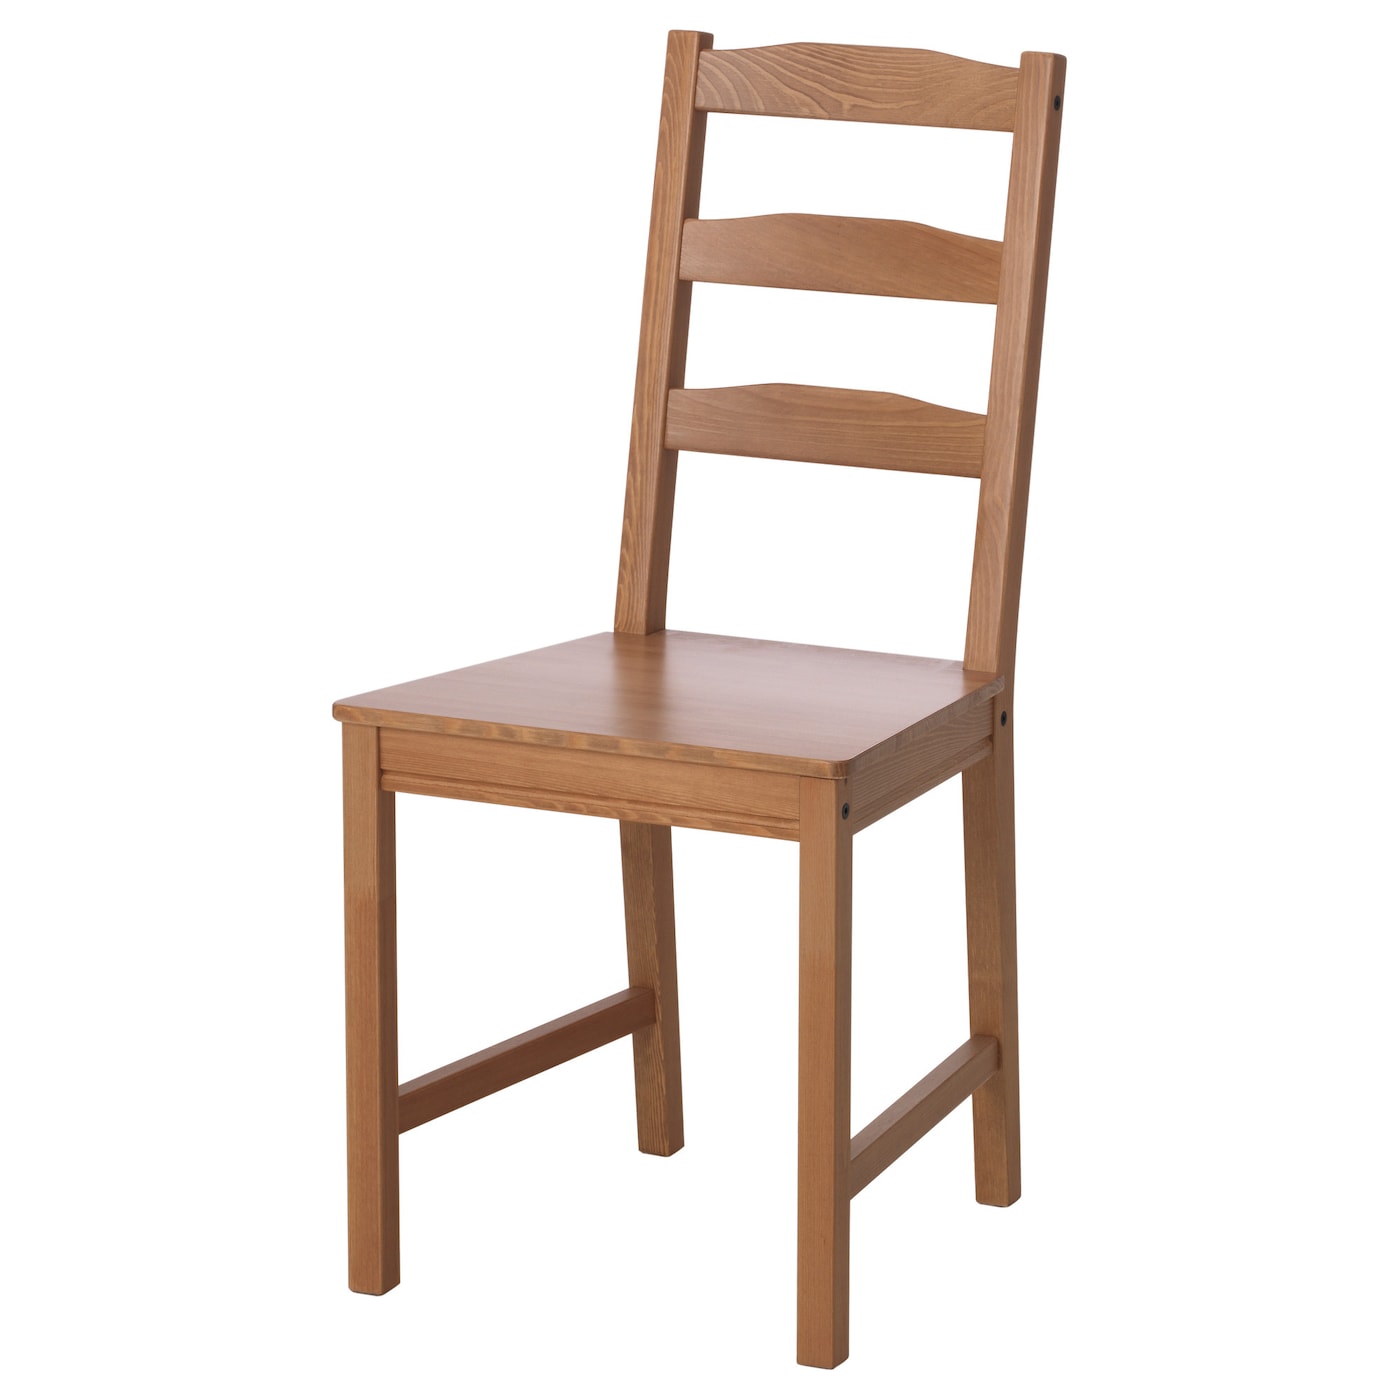 JOKKMOKK chair antique stain - IKEA